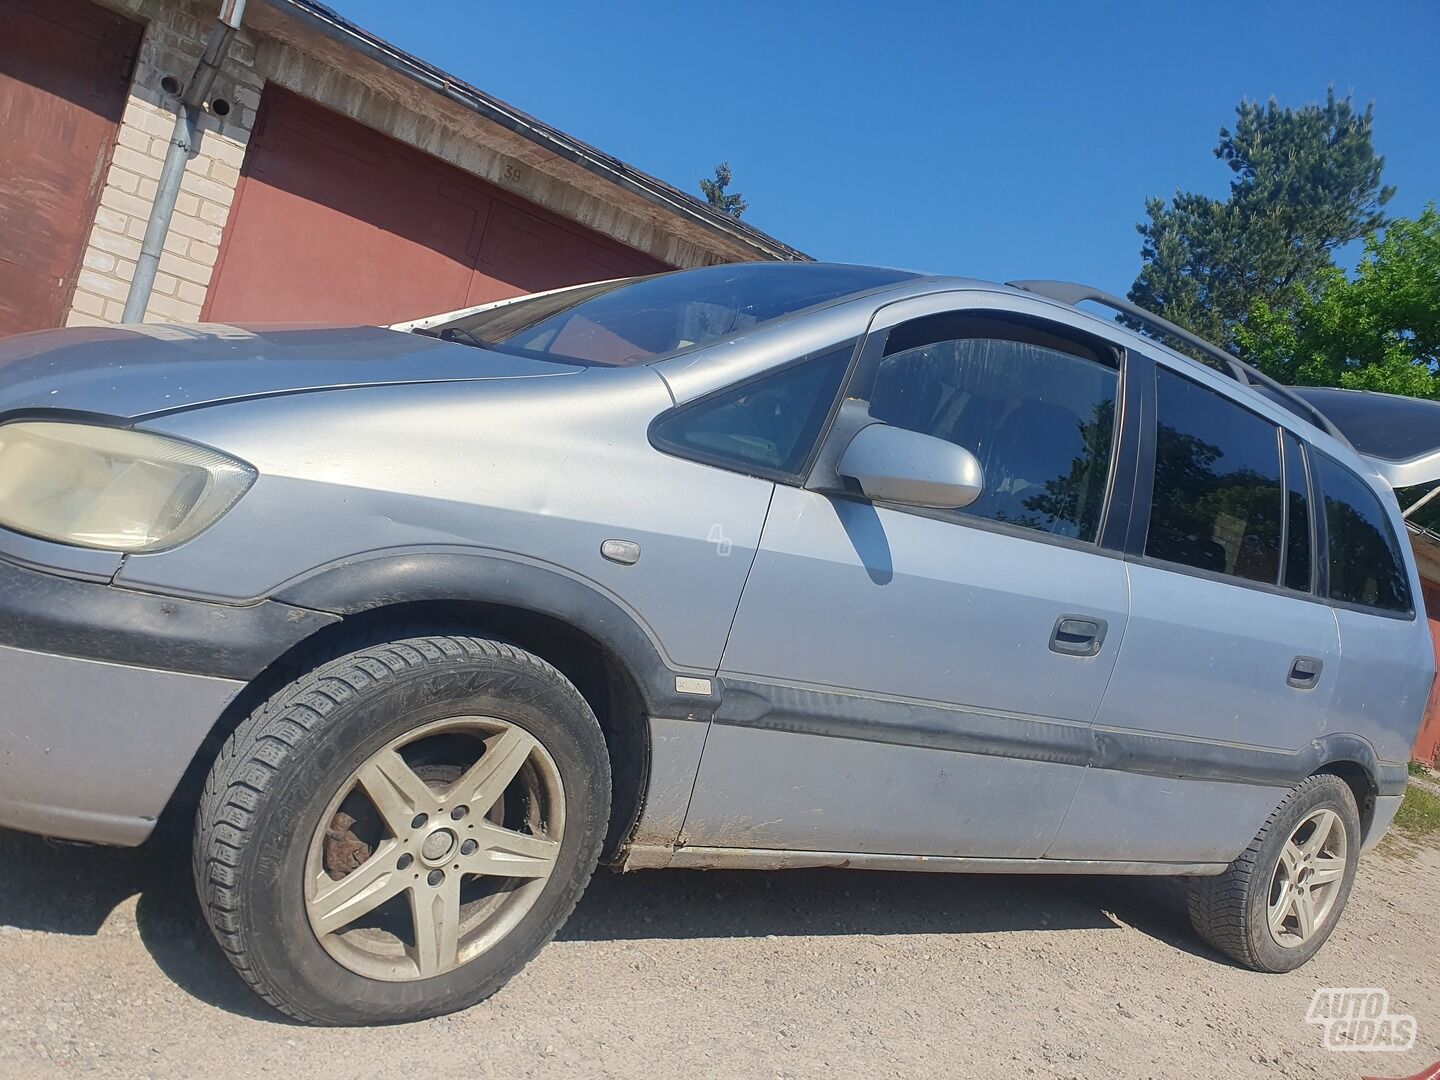 Opel Zafira 2000 г запчясти